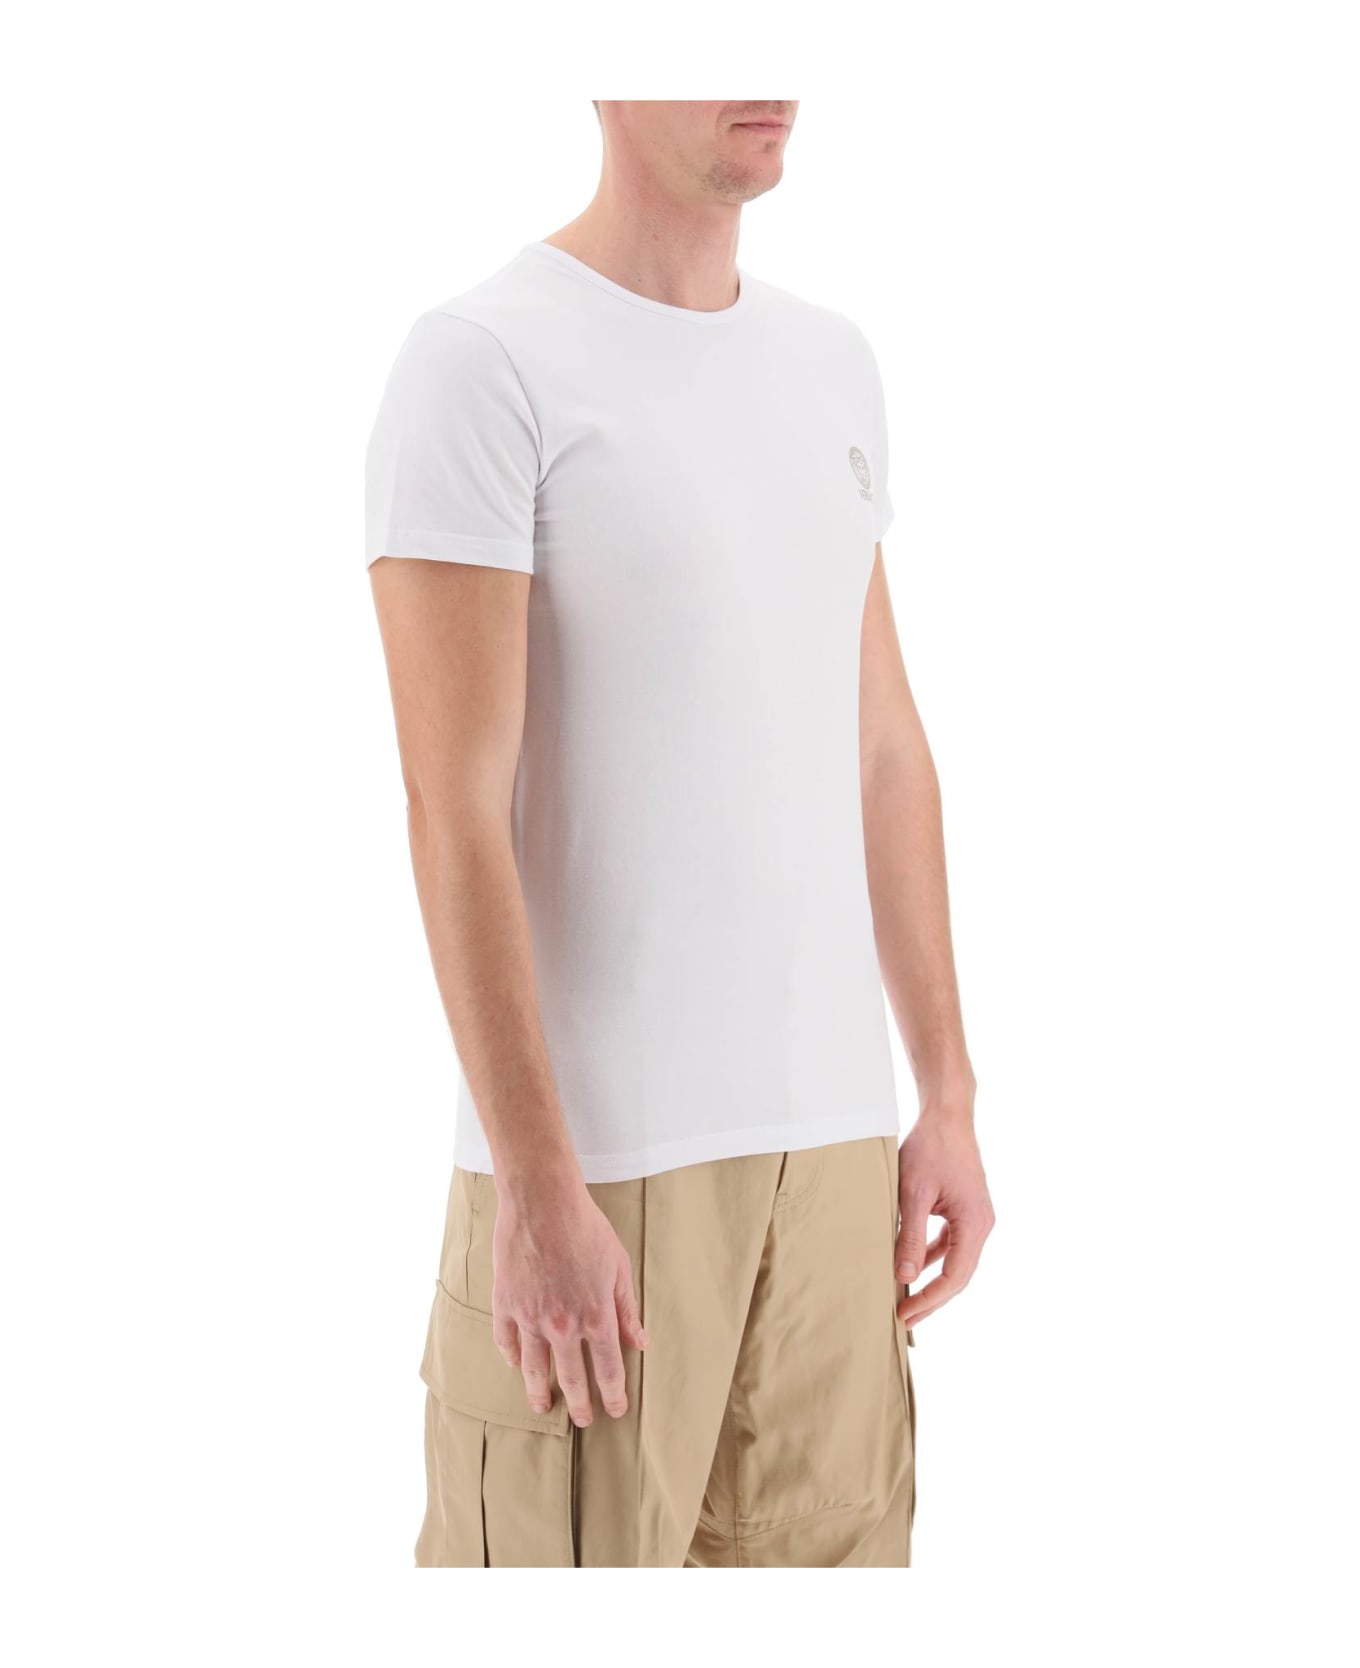 Versace Medusa Underwear T-shirt Bi-pack - Optical white